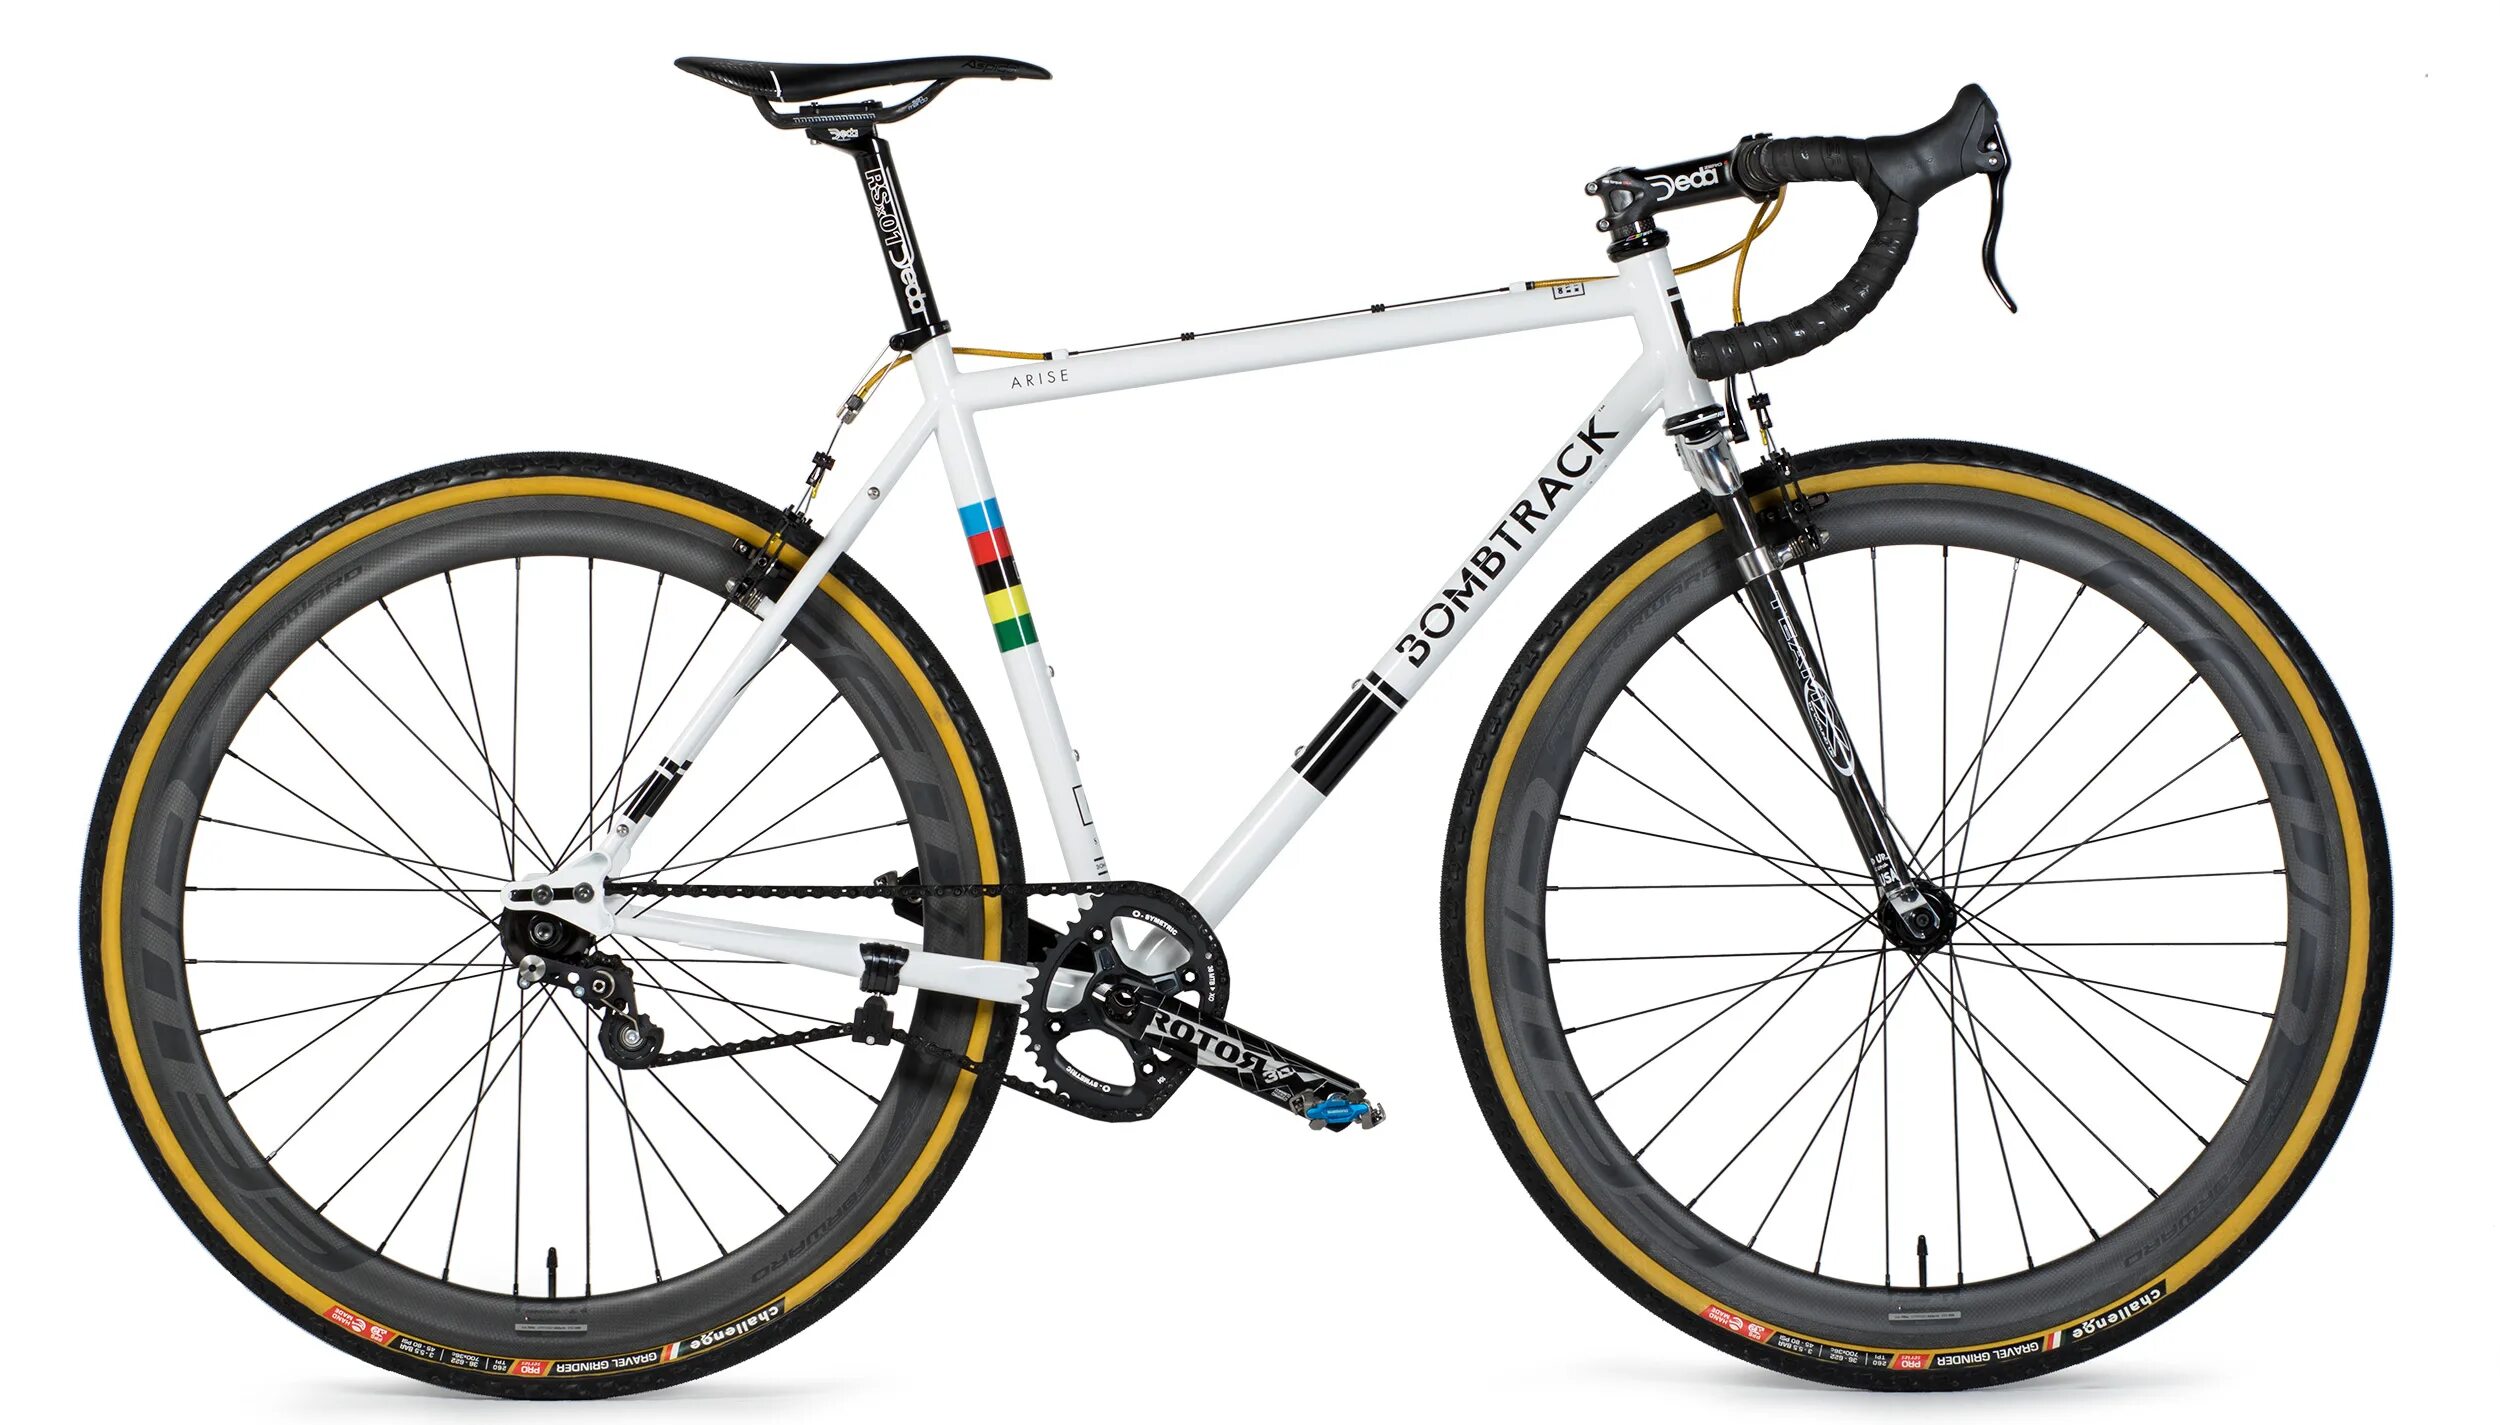 Циклокросс синглспид. Бомбтрек велосипед. Велосипед Arise t30. Grossman Project Bikes. Bike project